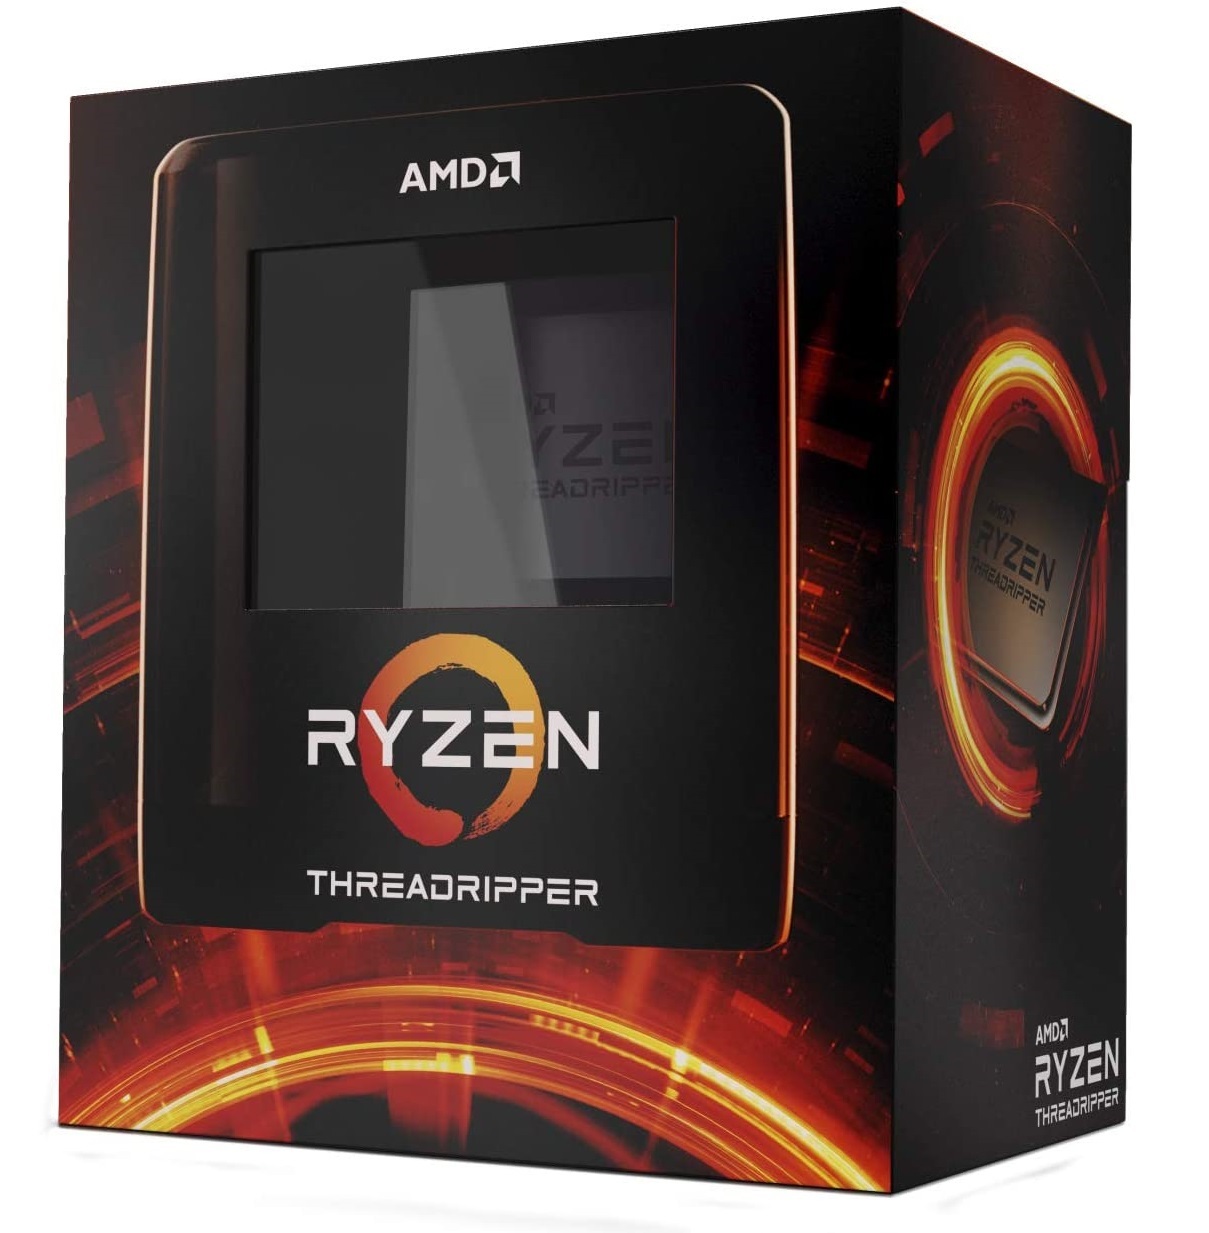 Bộ vi xử lý - CPU AMD Ryzen Threadripper 3970X